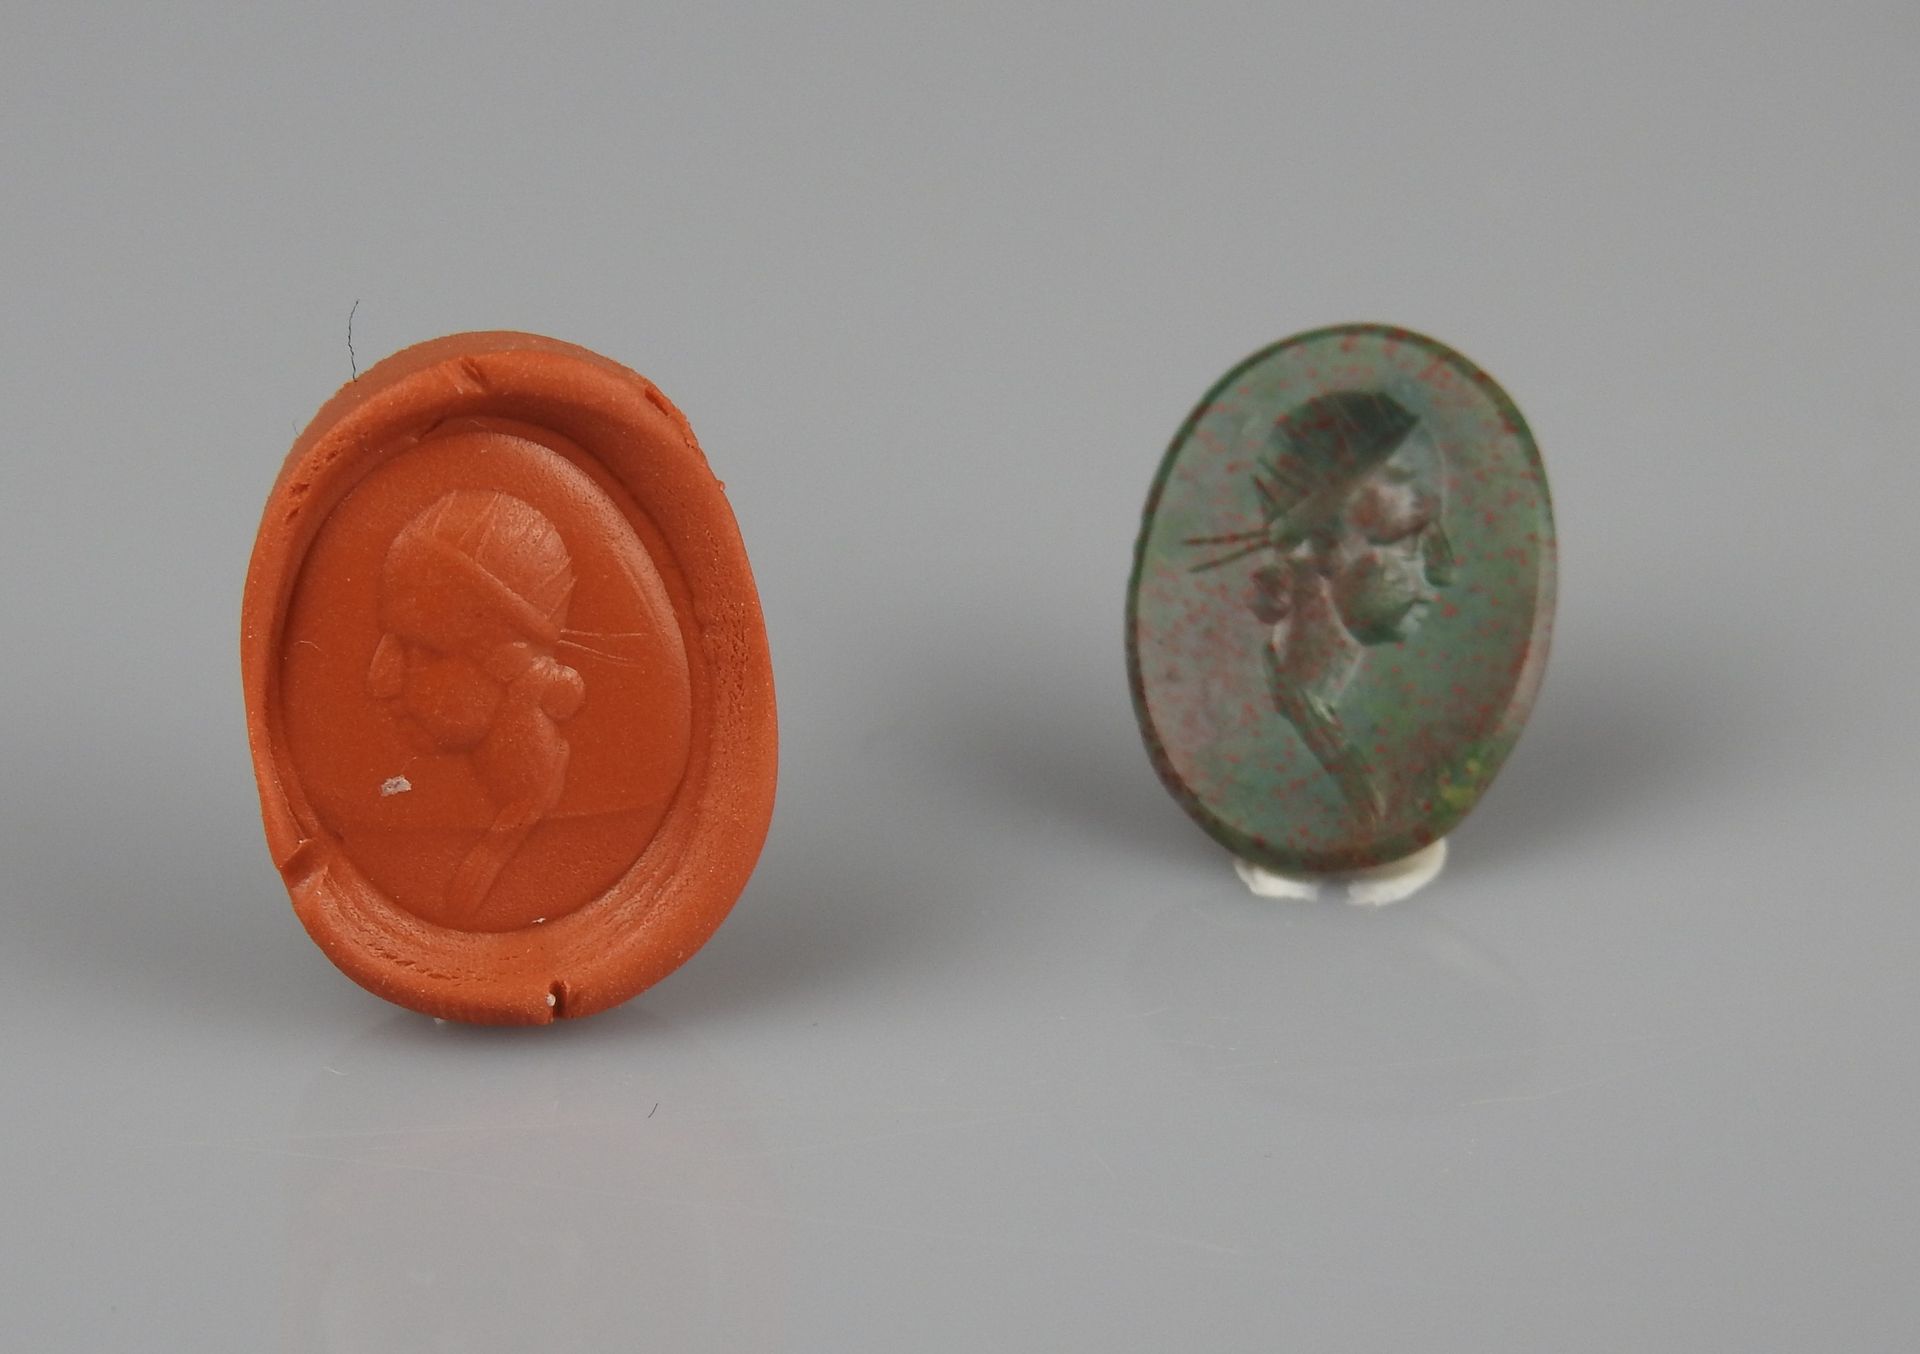 Null 凹版画，表现一个梳着球状发髻的女性形象

红色斑点的绿色碧玉1.5厘米

现代时期